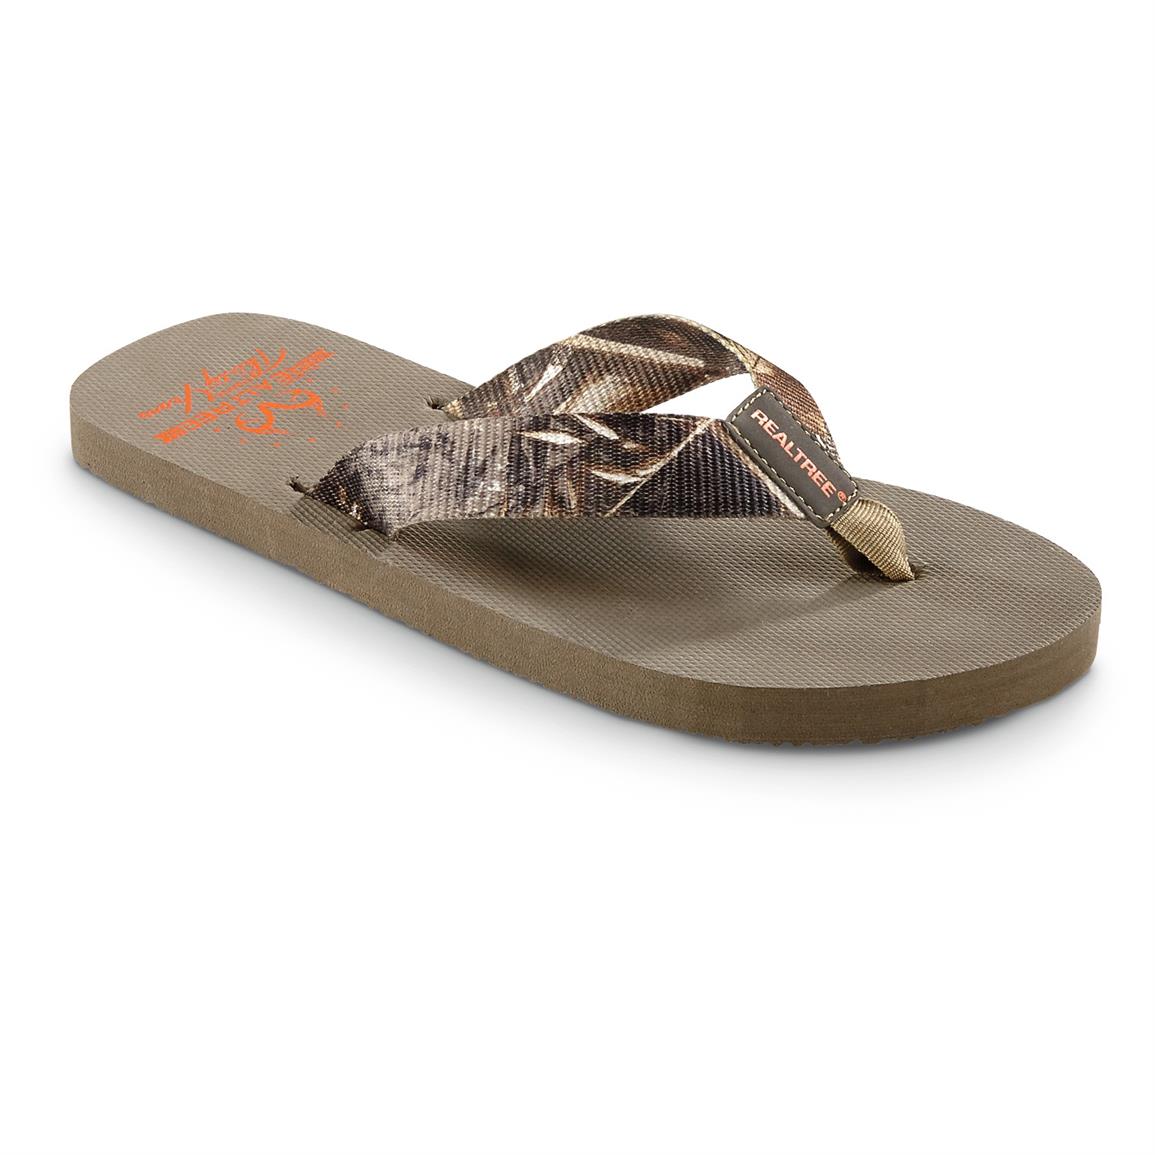 Realtree Men's Tide Water Shoes with BONUS Flip Flops - 660917, Sandals ...